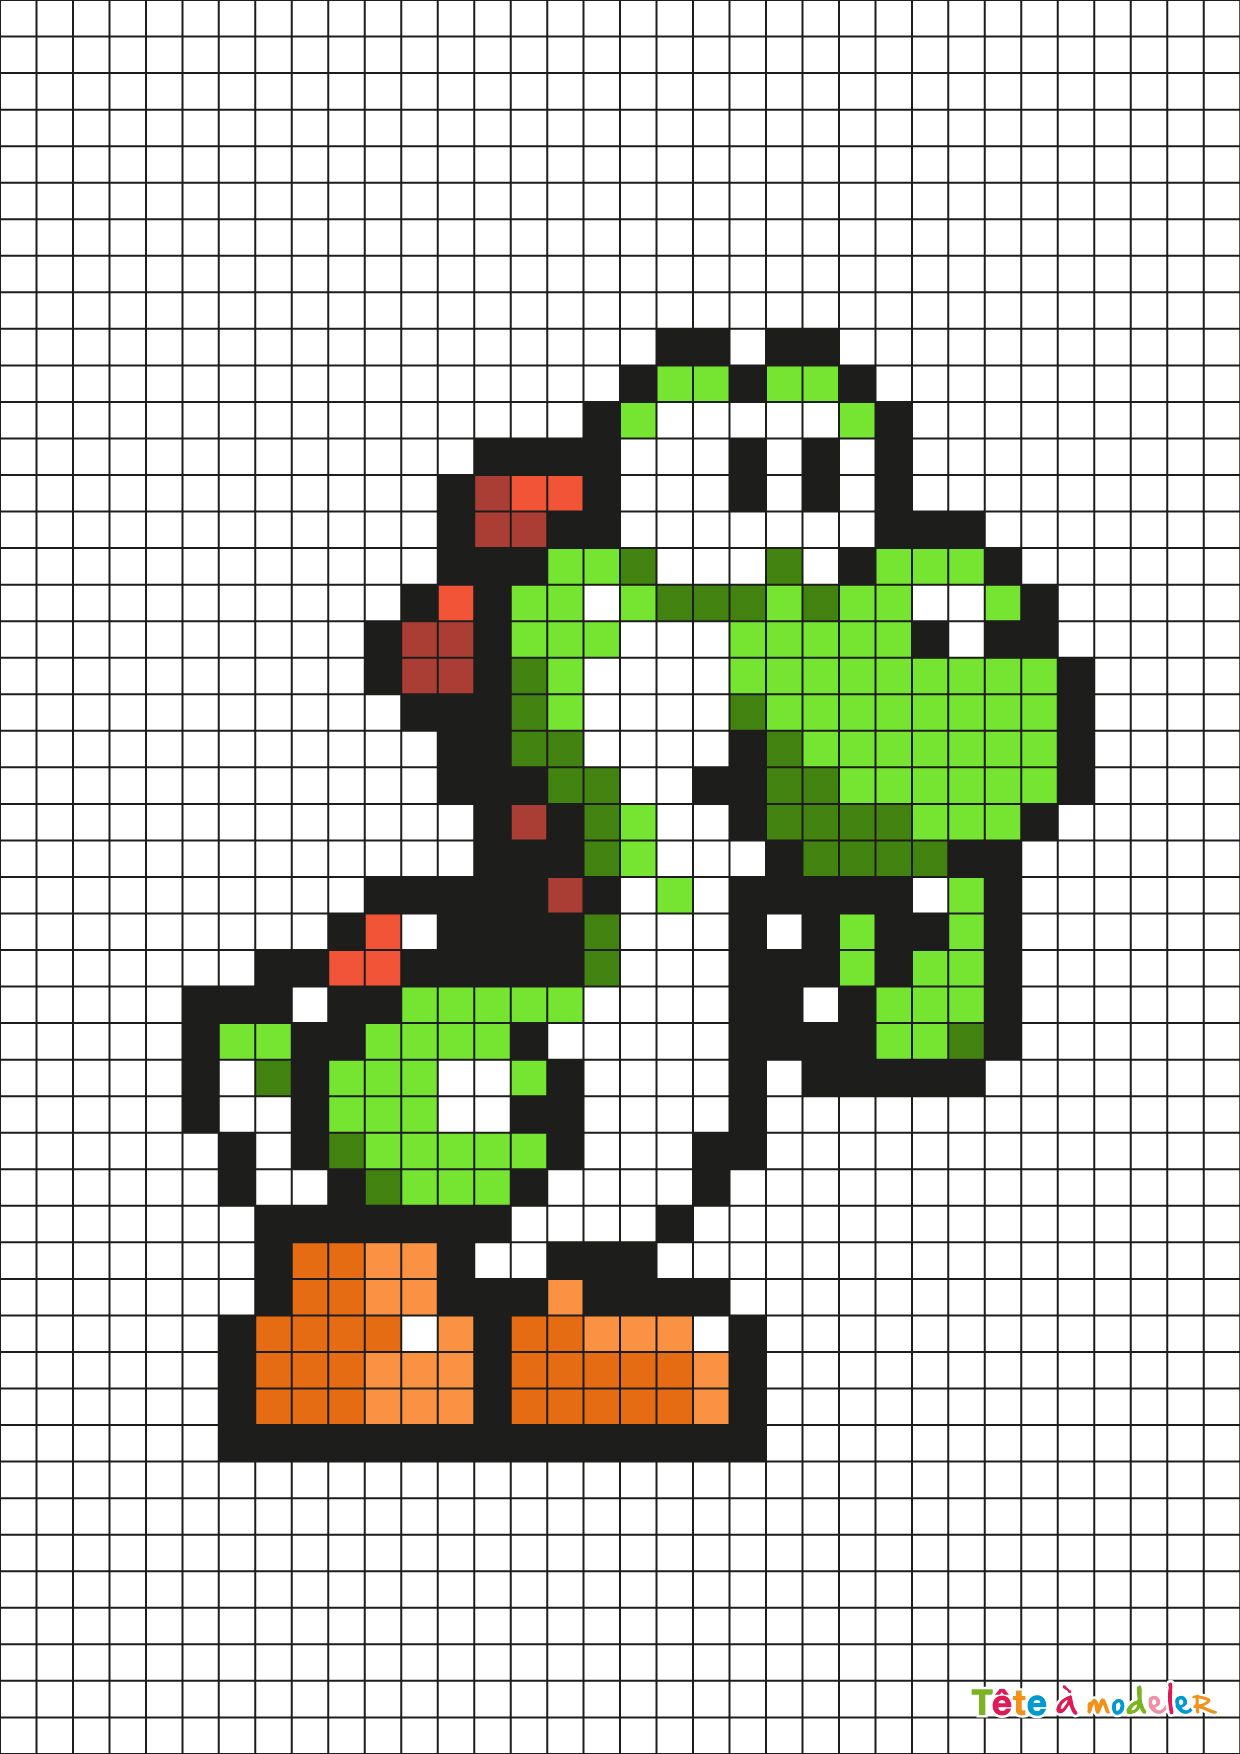 Pixel Art Grid Tutorial